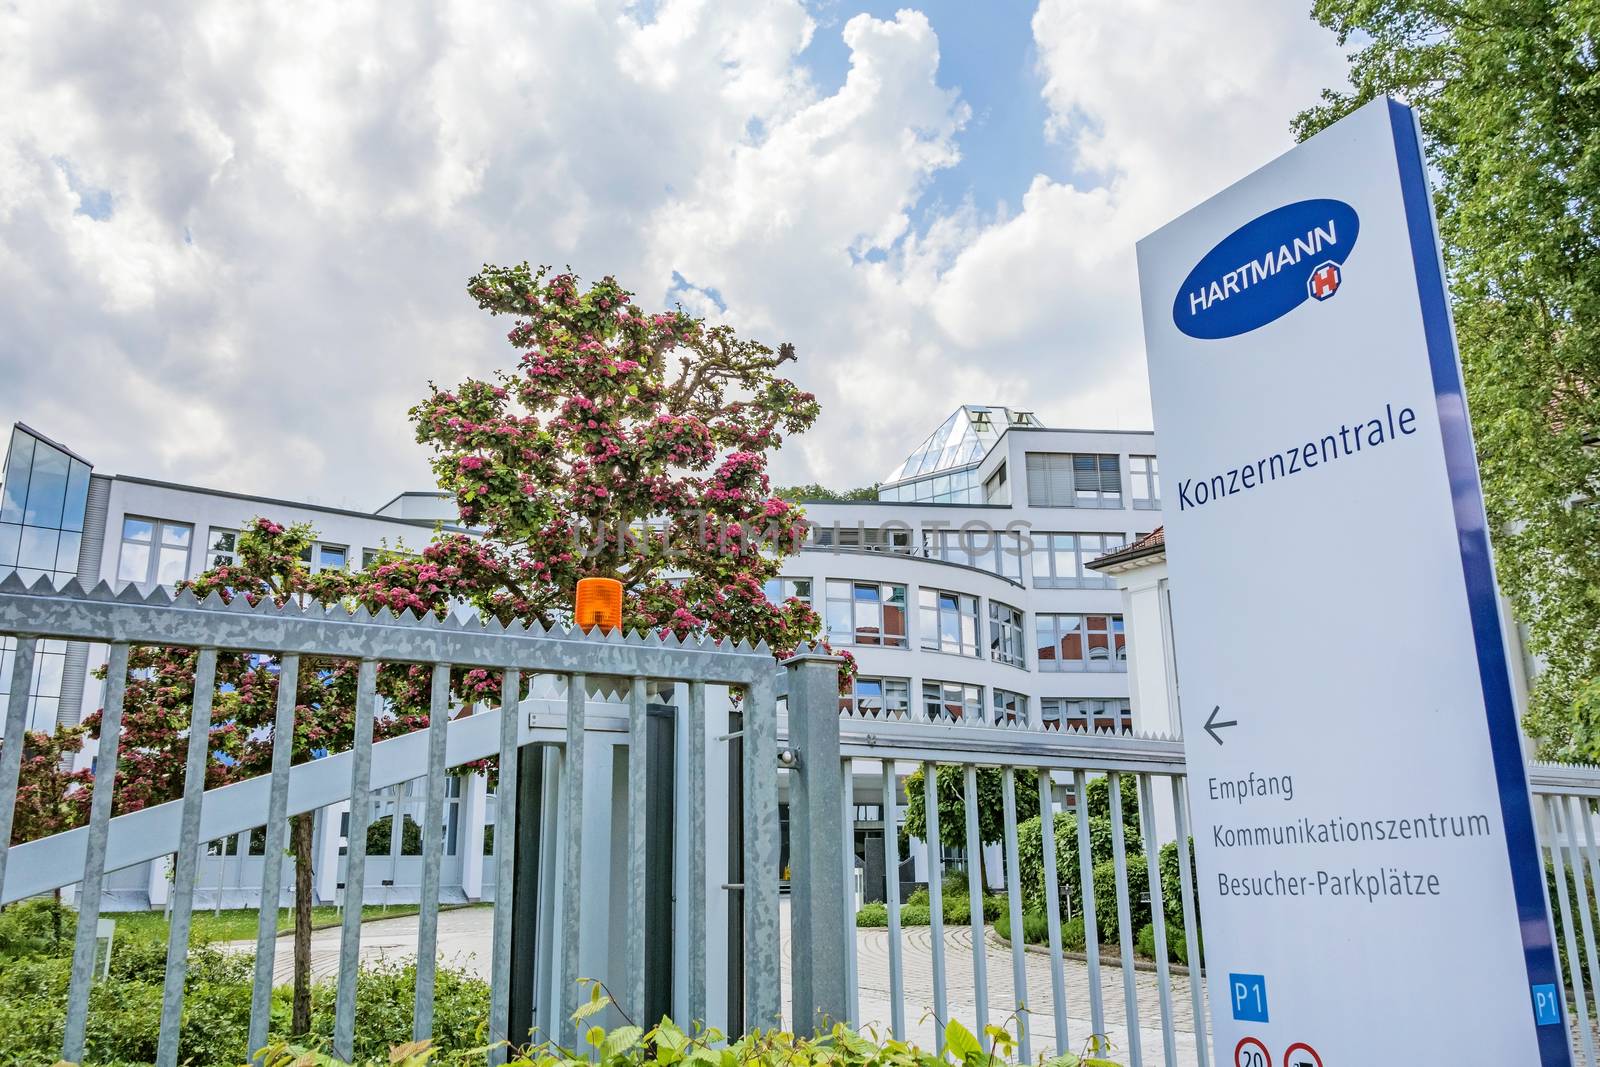 Corporate head office of Hartmann AG, Heidenheim, Germany by aldorado